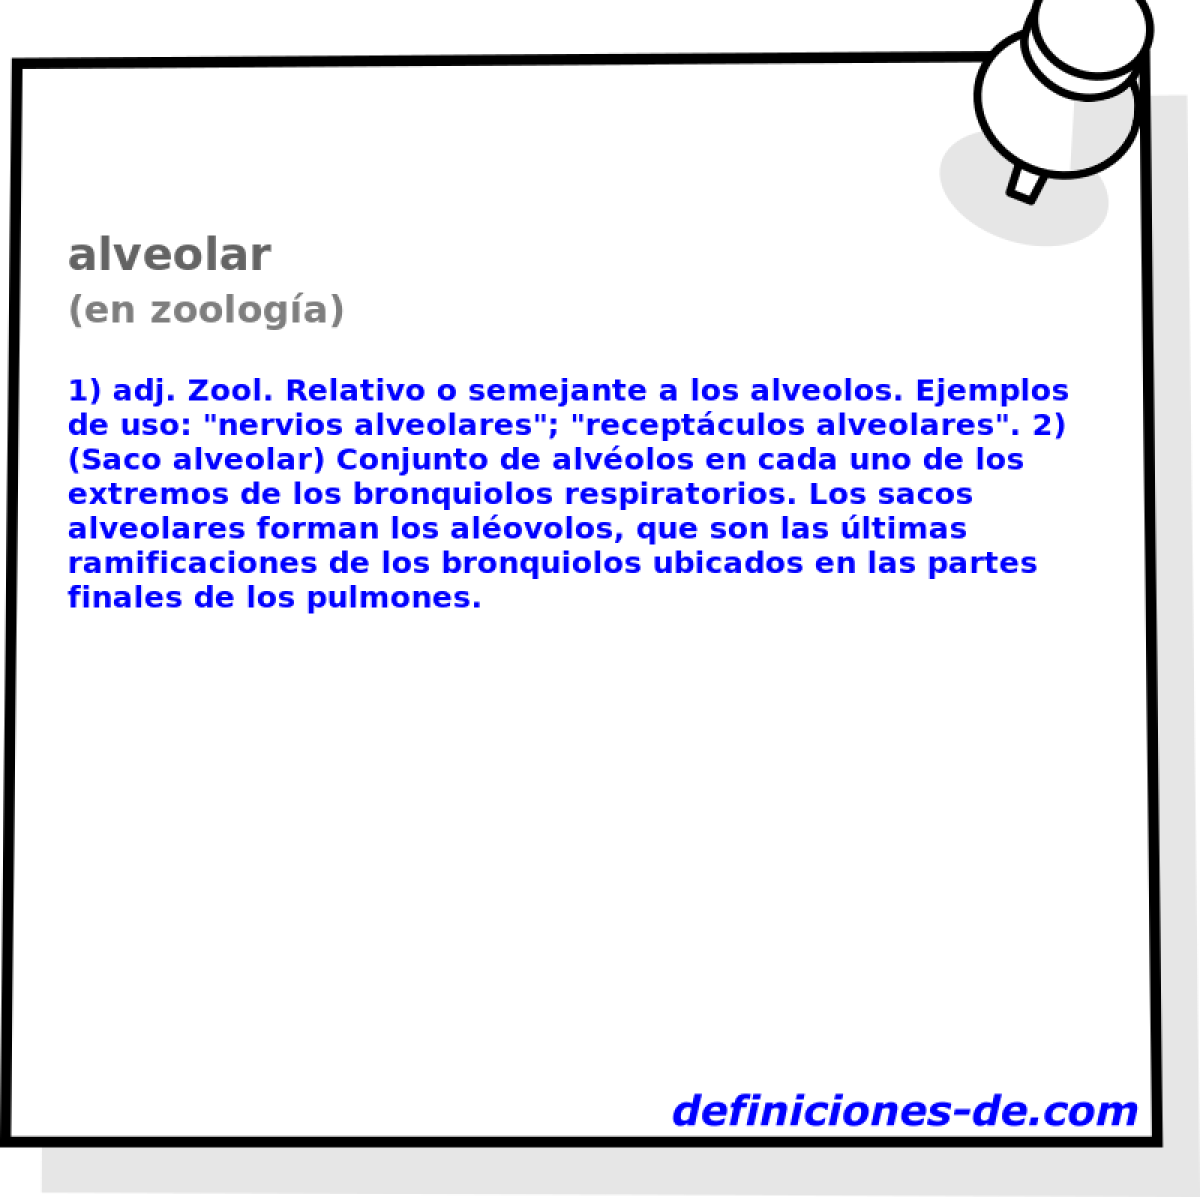 alveolar (en zoologa)